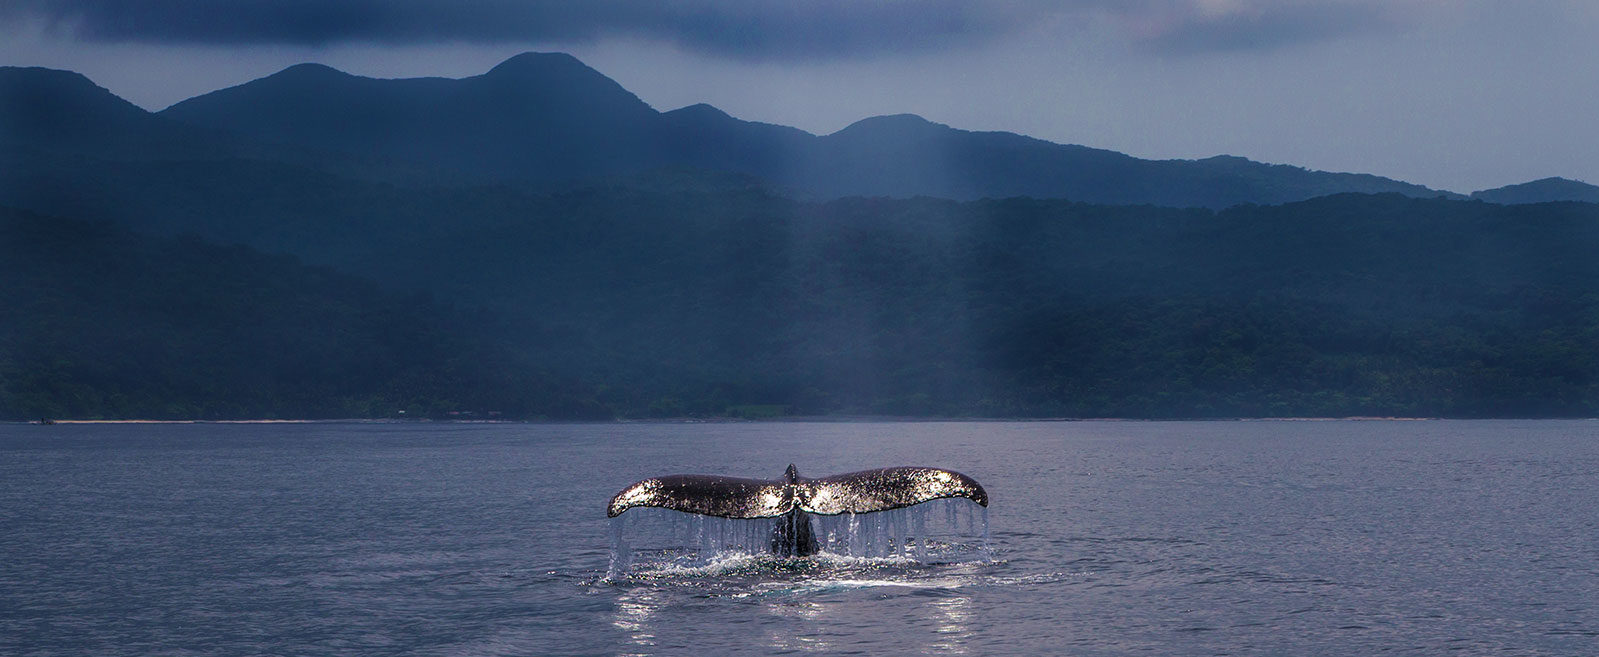 Philippines, Calayan Islands, Humpback Whale Fluke